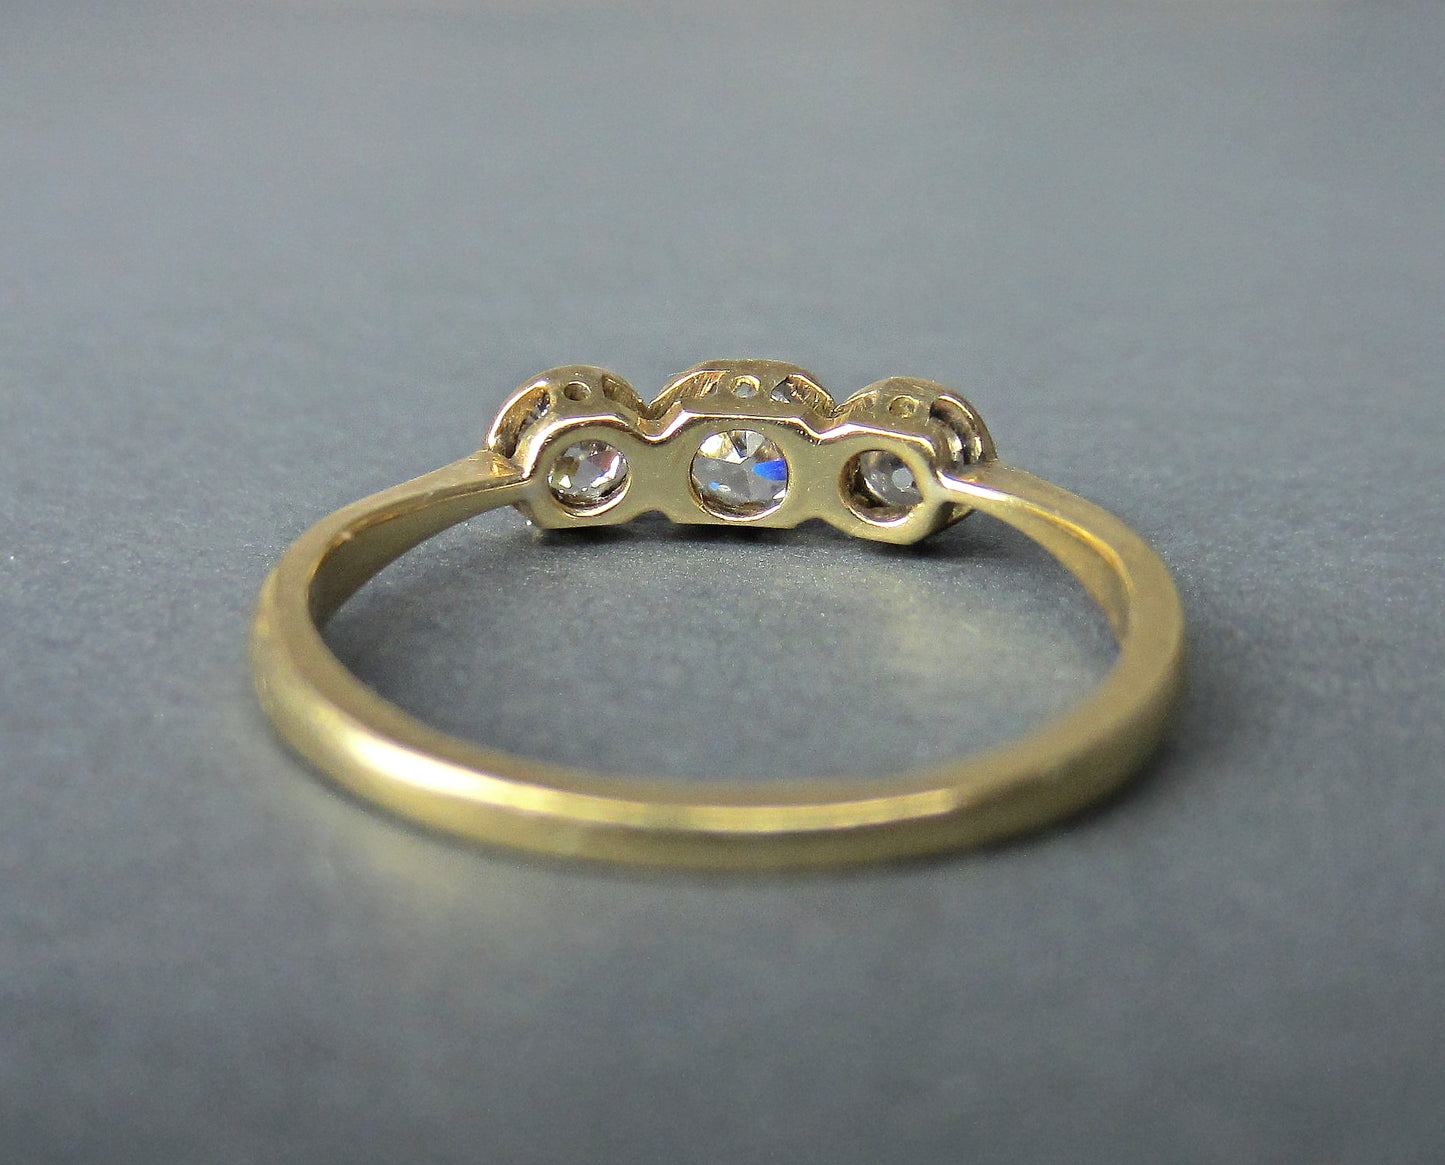 Sold-Edwardian Bezel Set Three Old European Diamond Ring Platinum/18k c. 1910